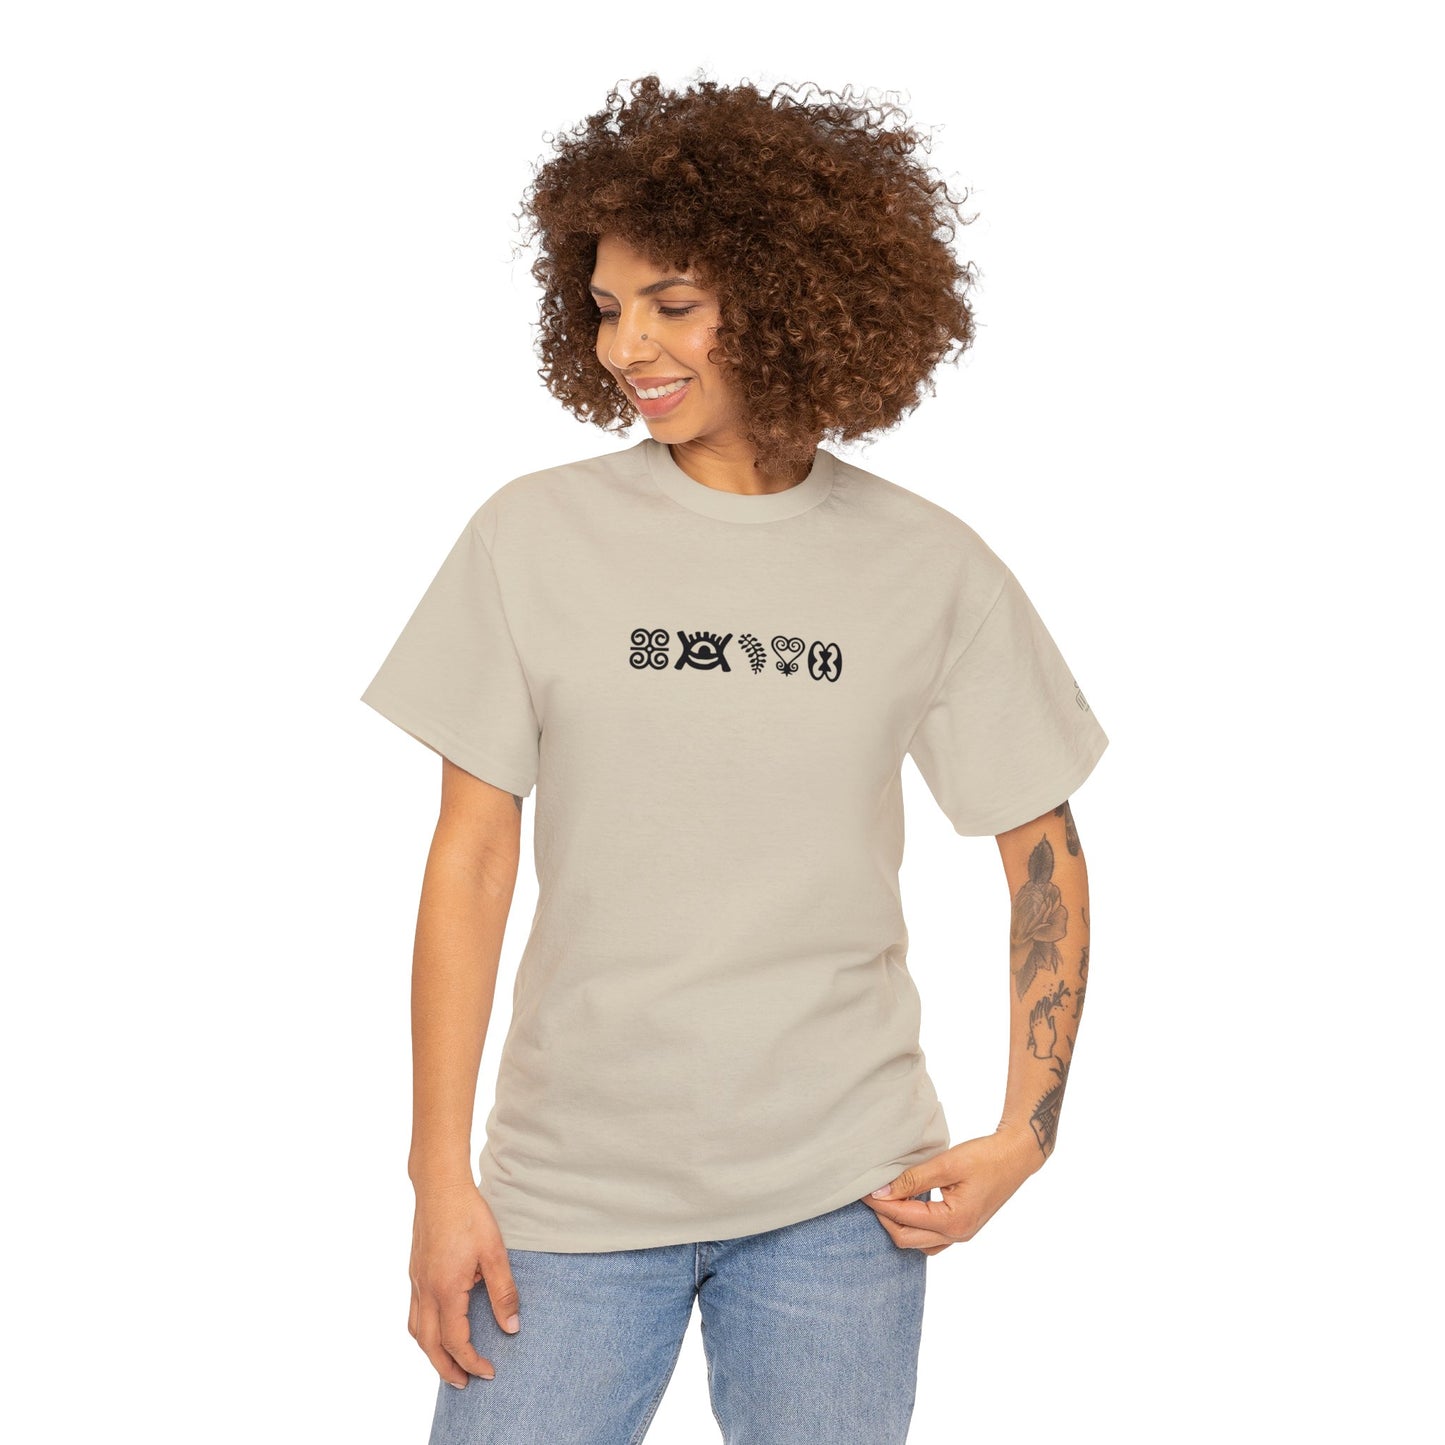 Dwannini mmen T-shirt